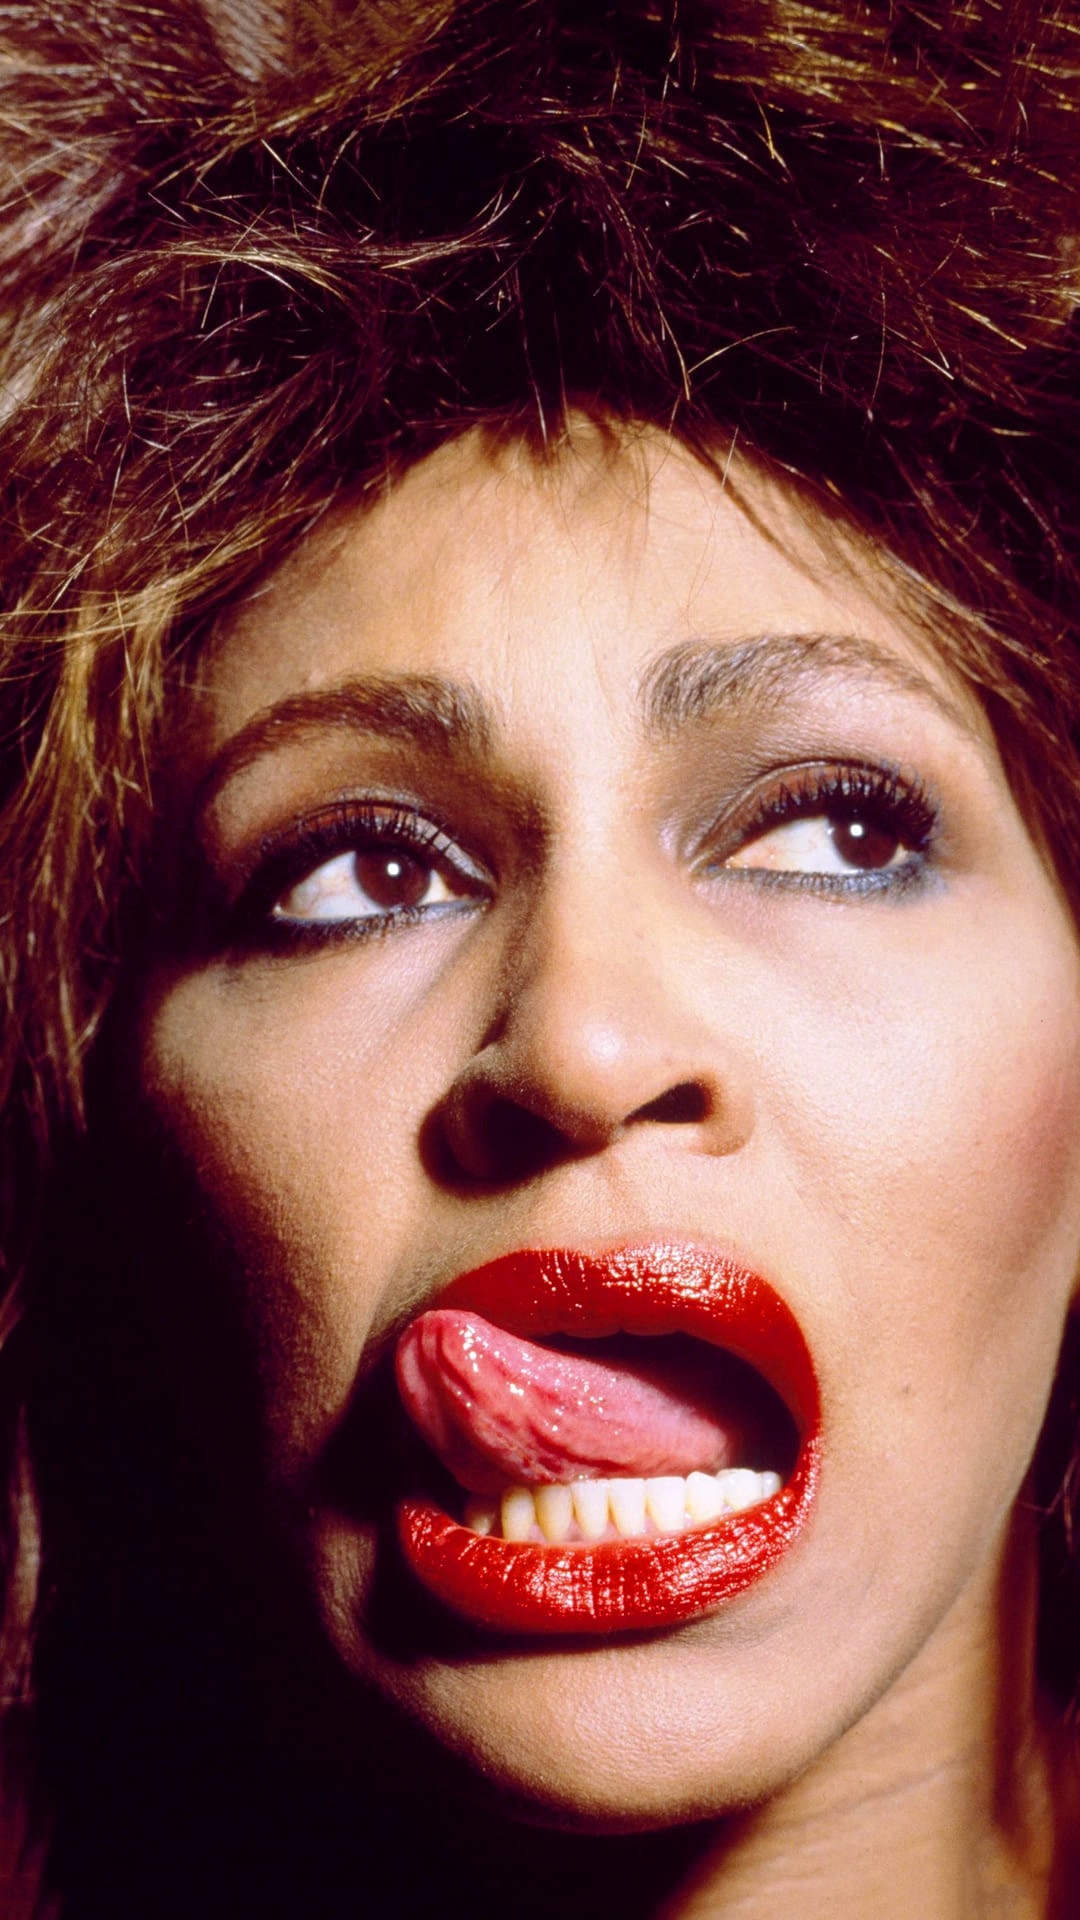 Tina Turner Wallpapers